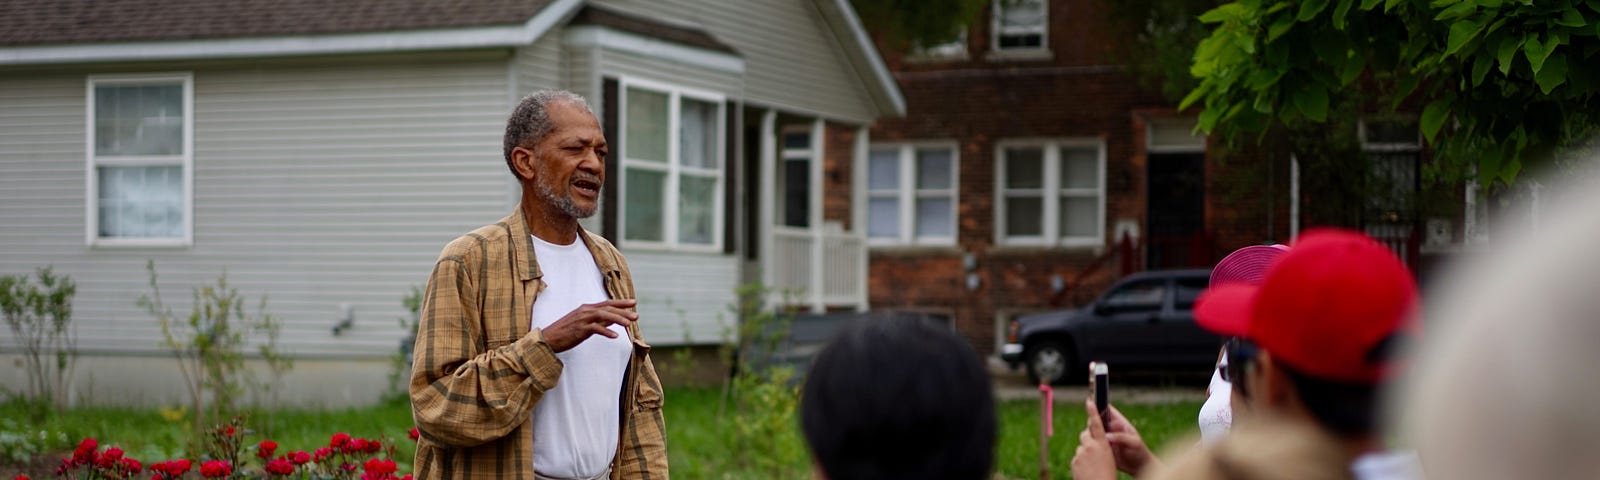 An aspiring entrepreneur leading a neighborhood tour during the Detroit Neighborhood Tours project.